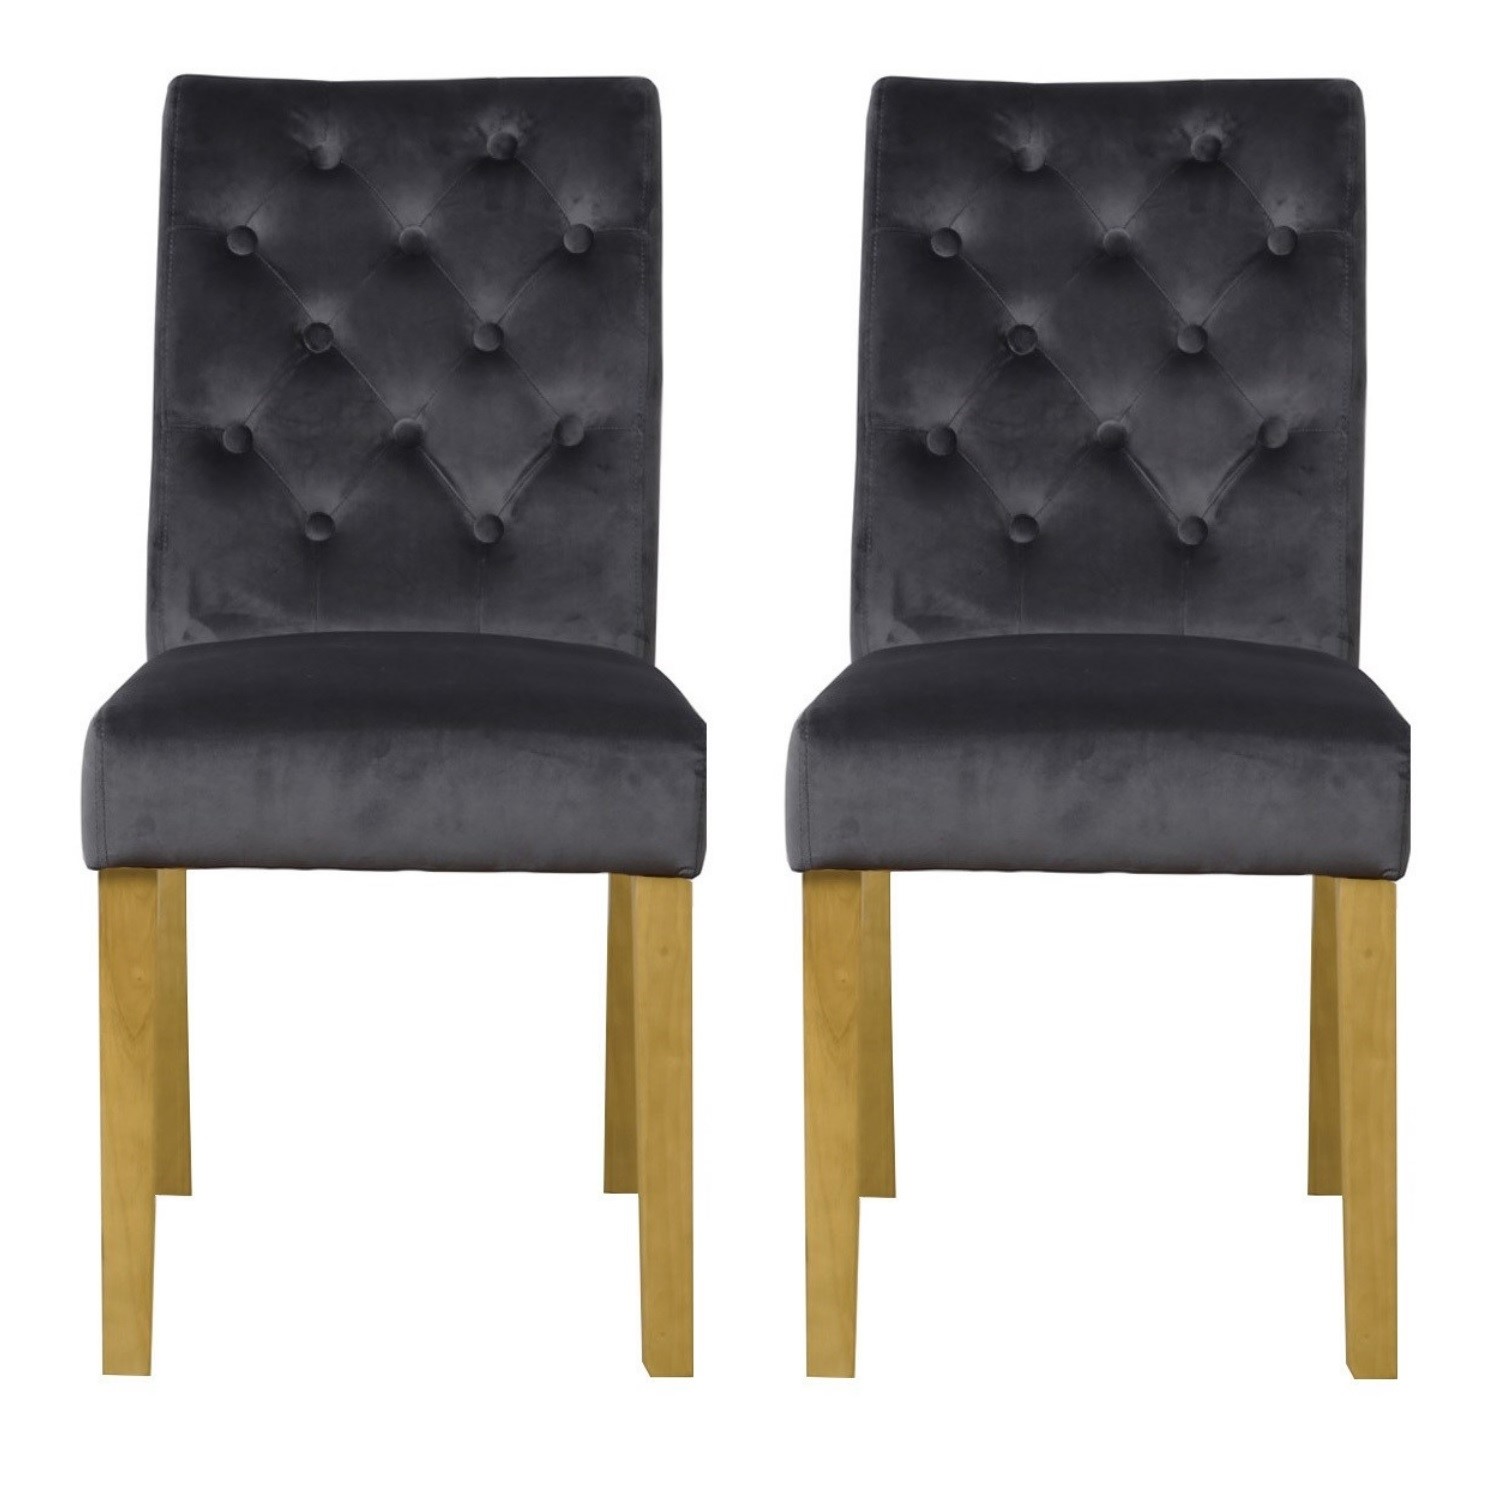 Velvet Dining Chairs With Oak Legs, Dark Grey Fabric Dining Chairs With Oak Legs